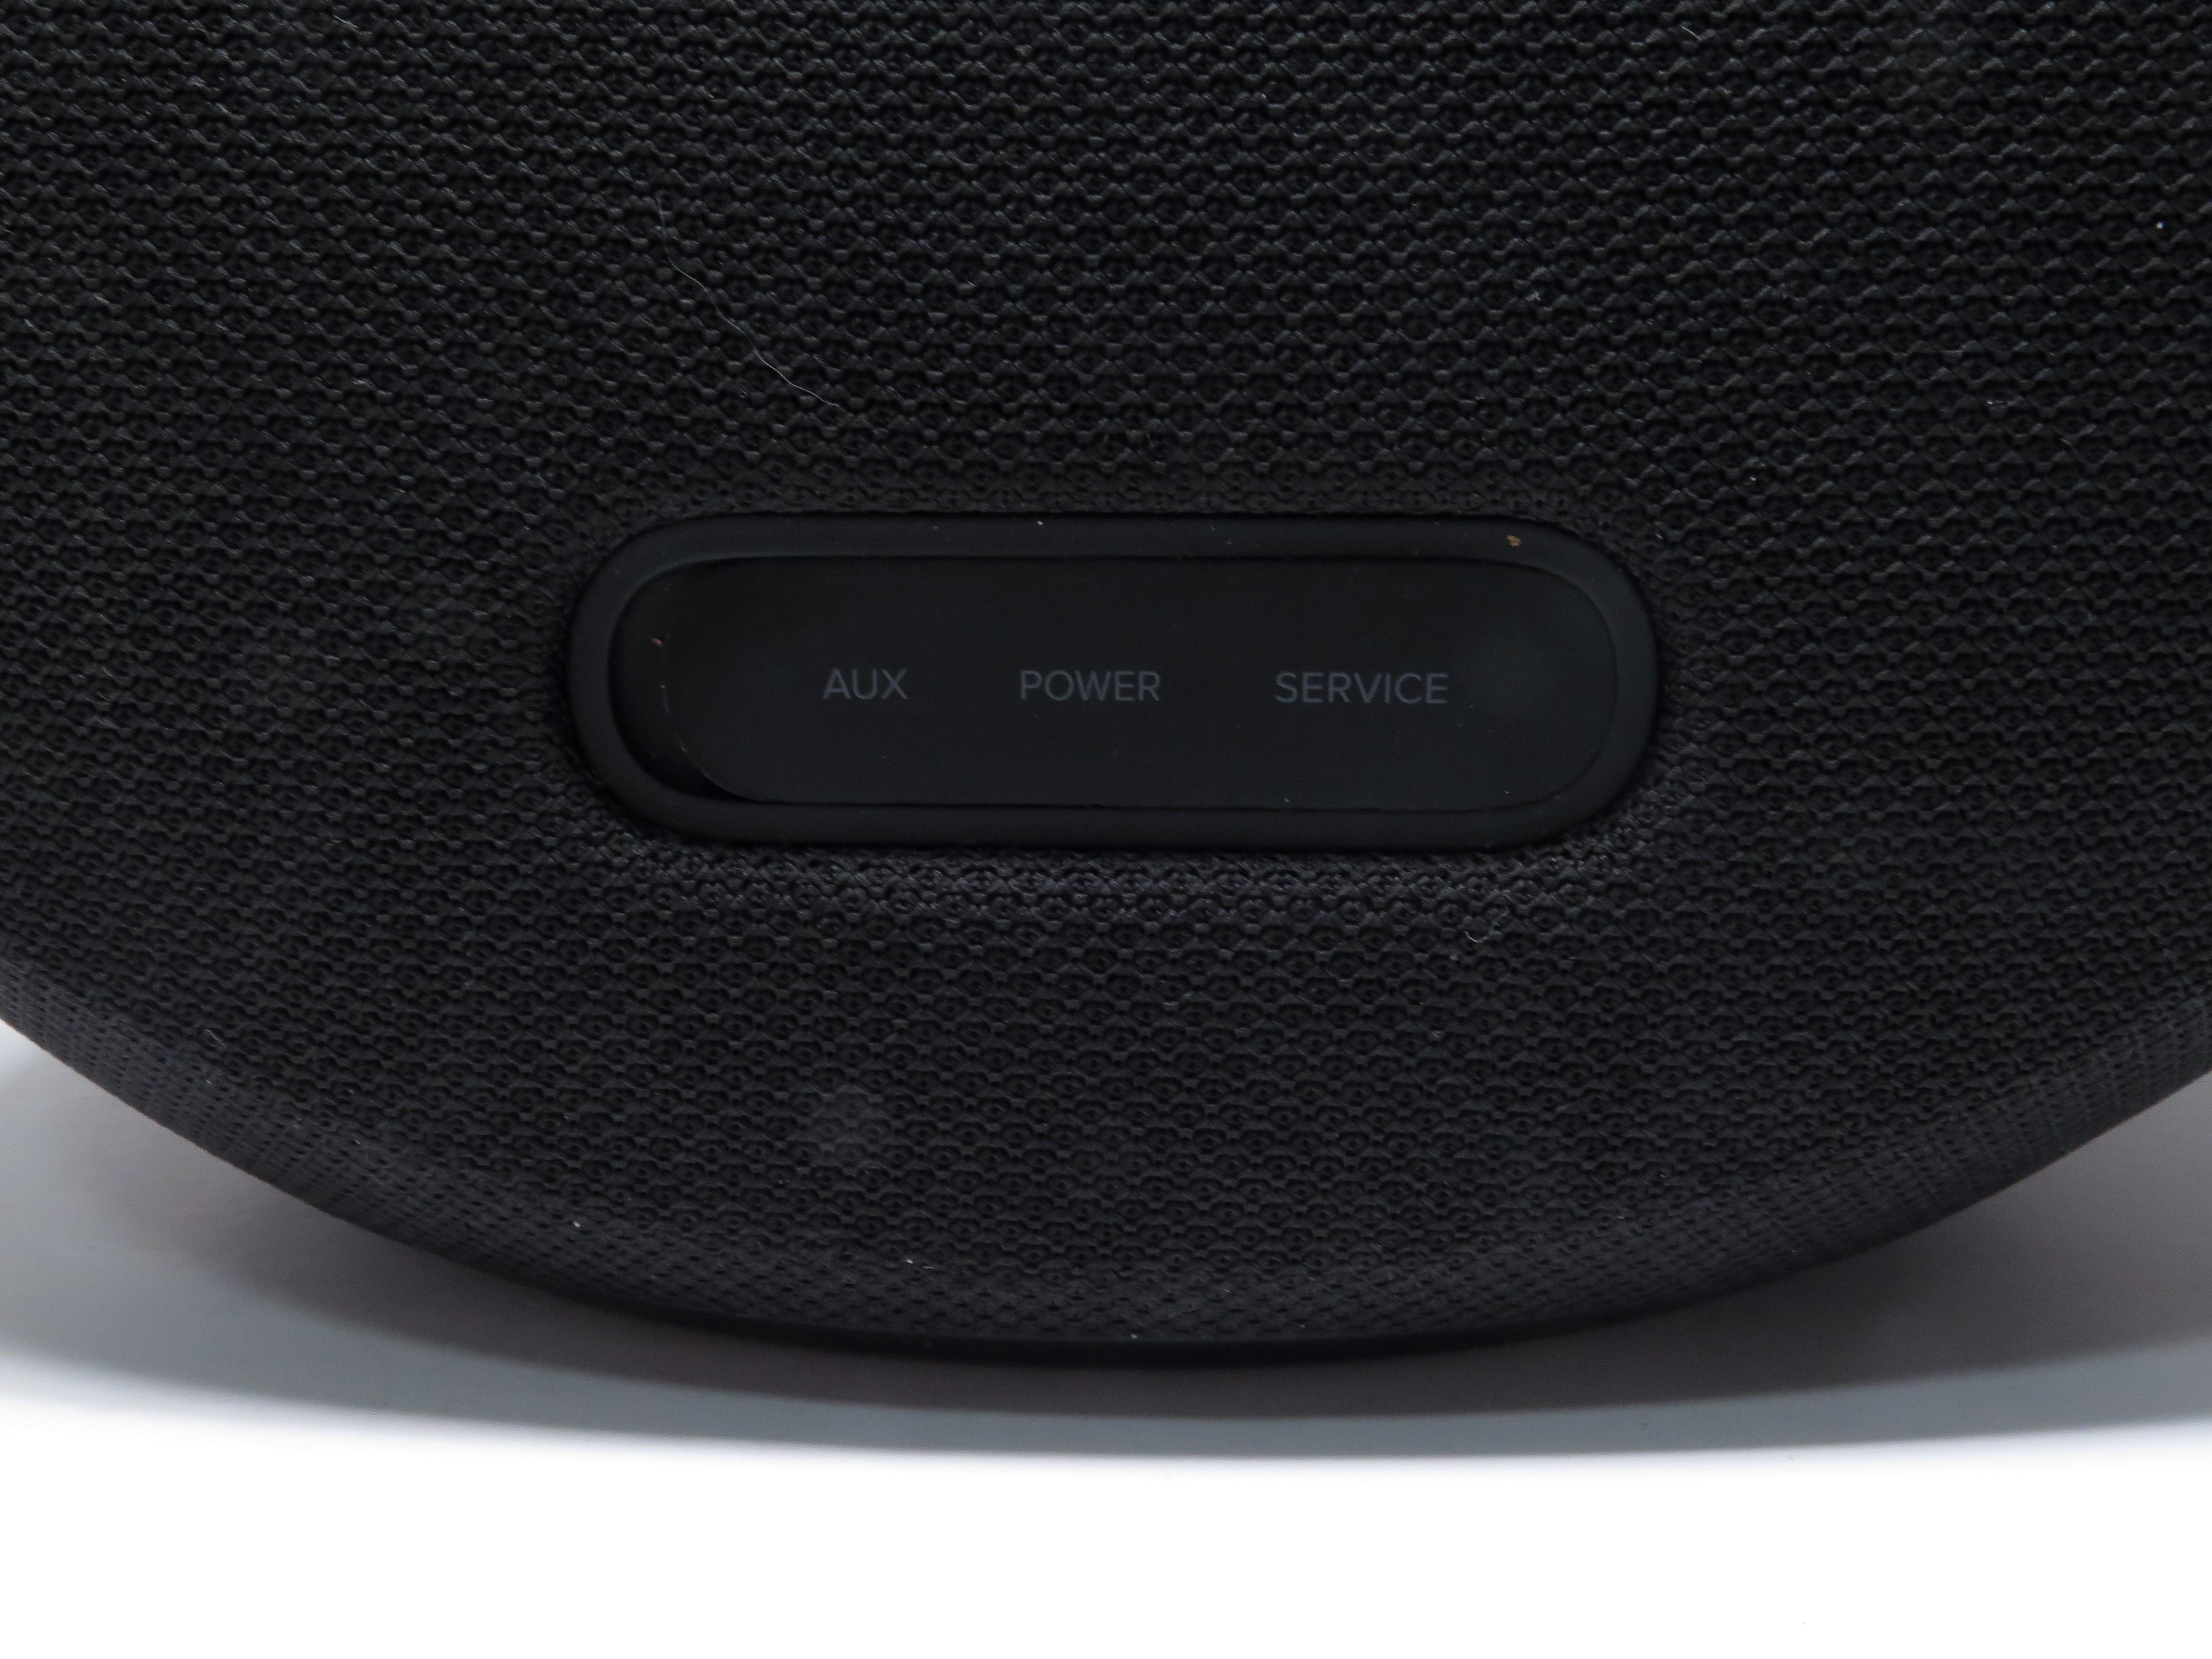 Harman Kardon Onyx Studio 6 Portable Bluetooth Speaker - Black